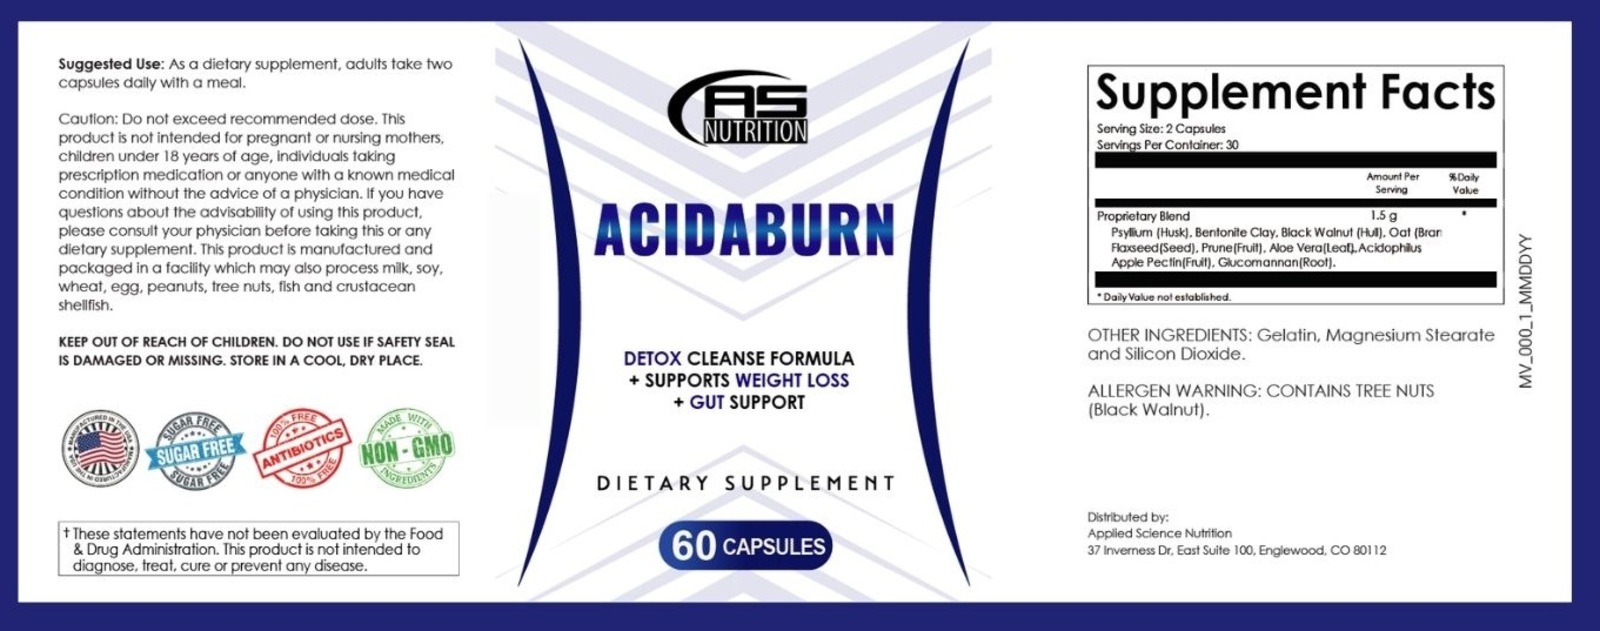 Acidaburn Supplement Facts